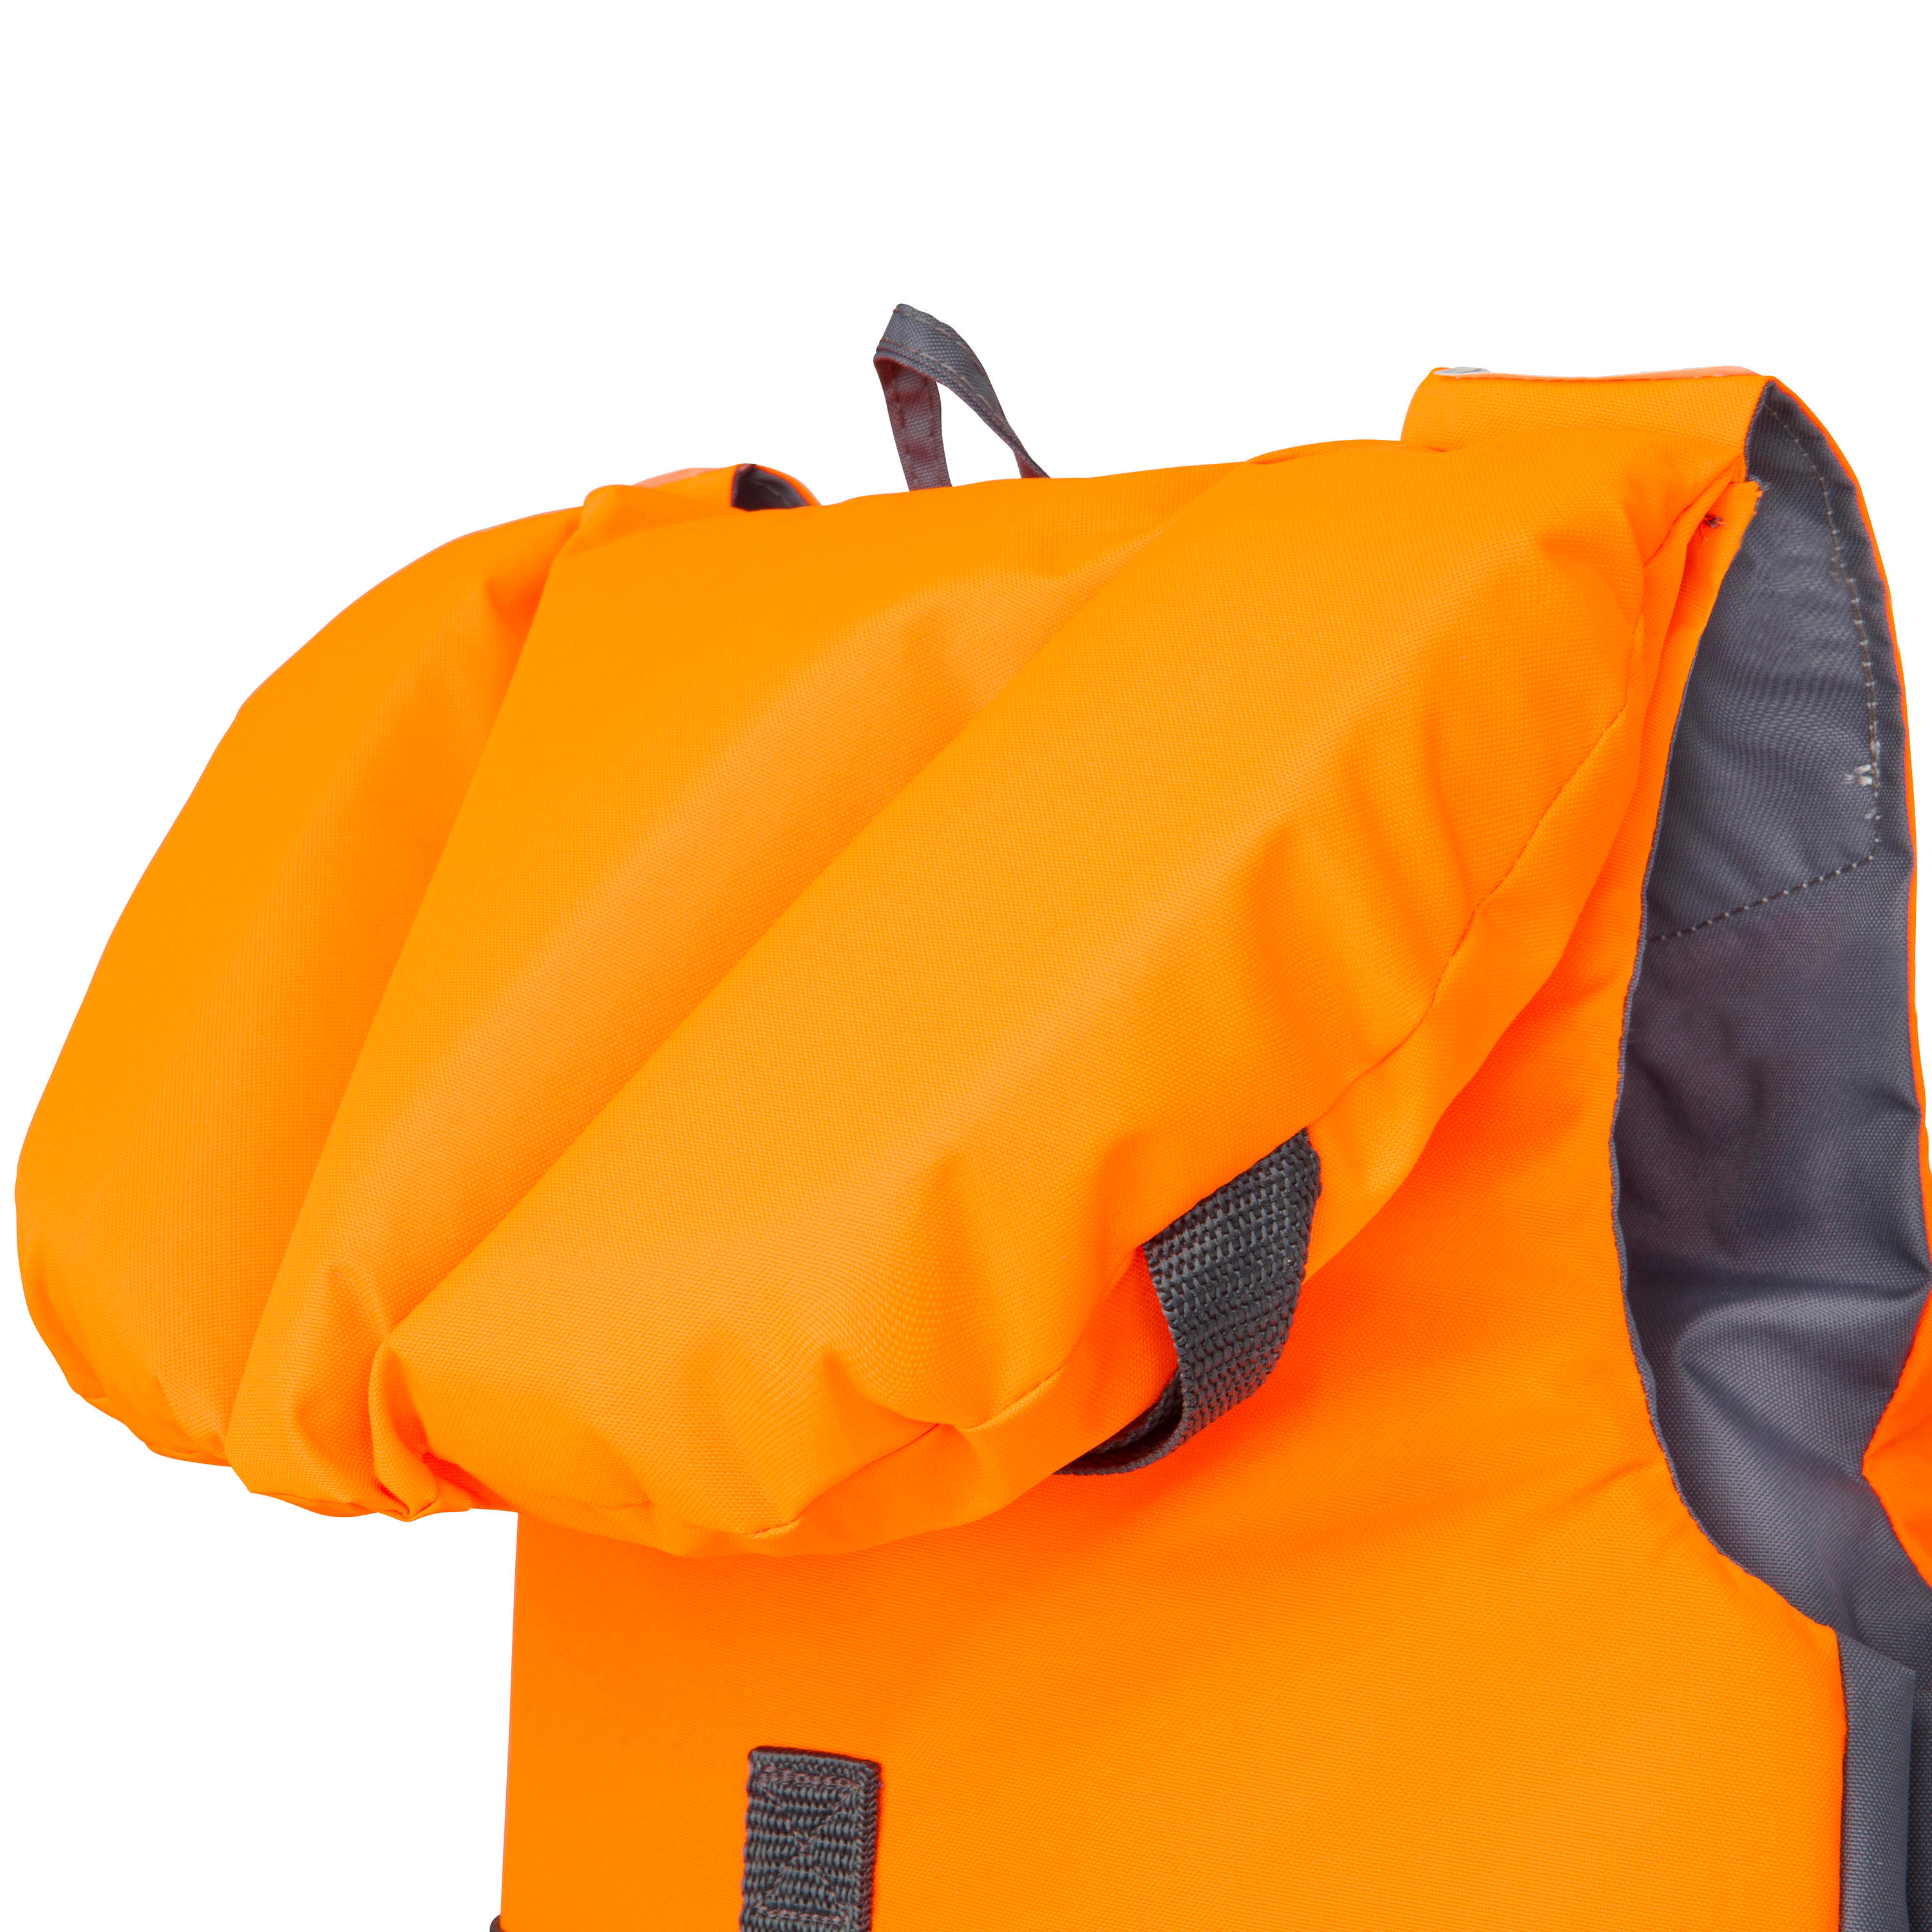 Kids' life jacket LJ100N Easy JR 15-40 kg - orange/grey 6/9